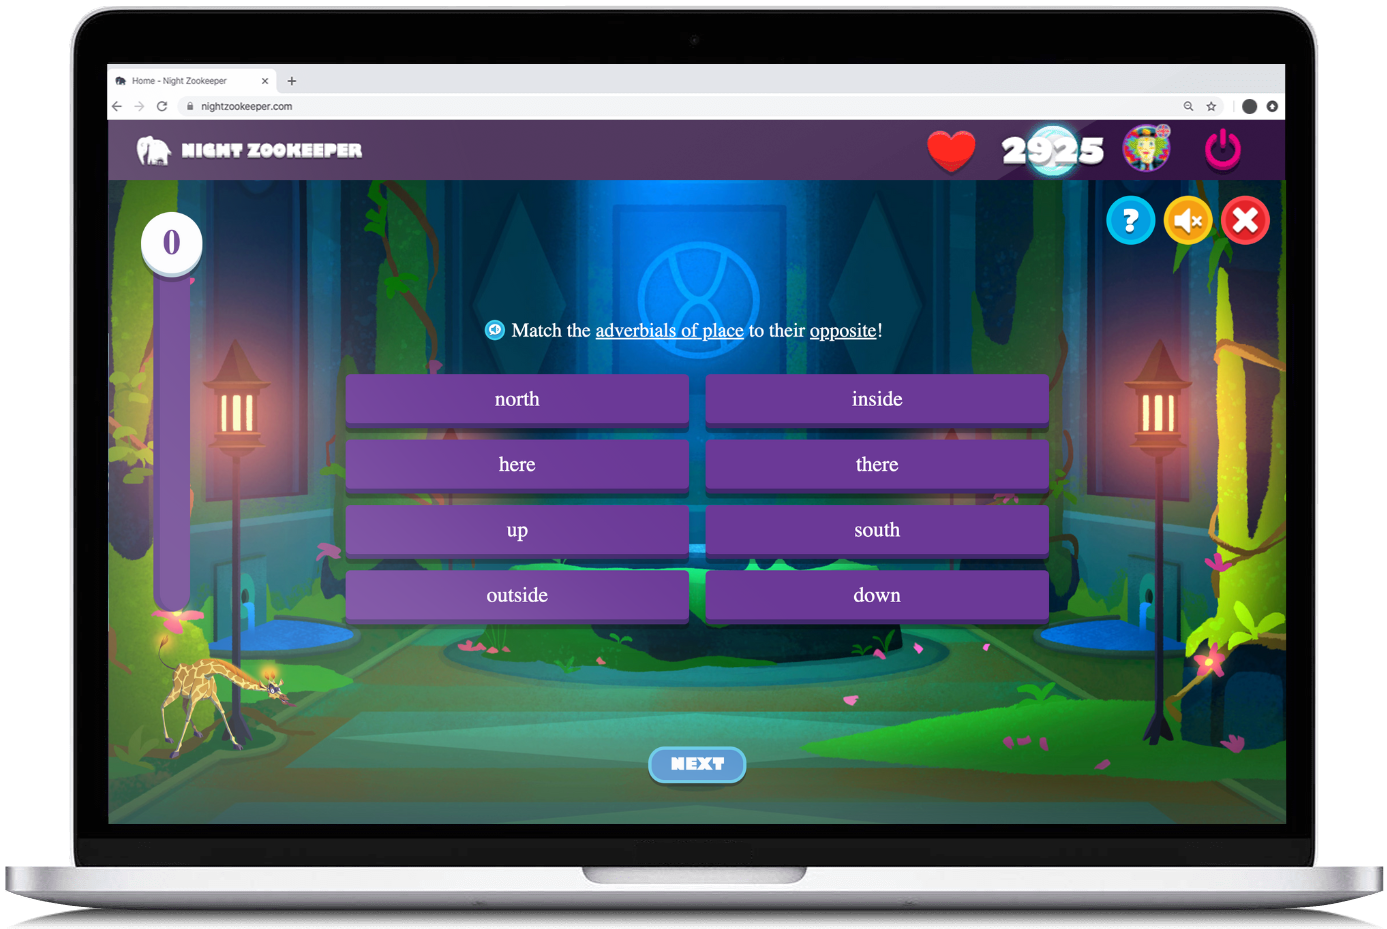 Maji's Matches, a fun writing game on Nightzookeeper.com, displayed on laptop screen.